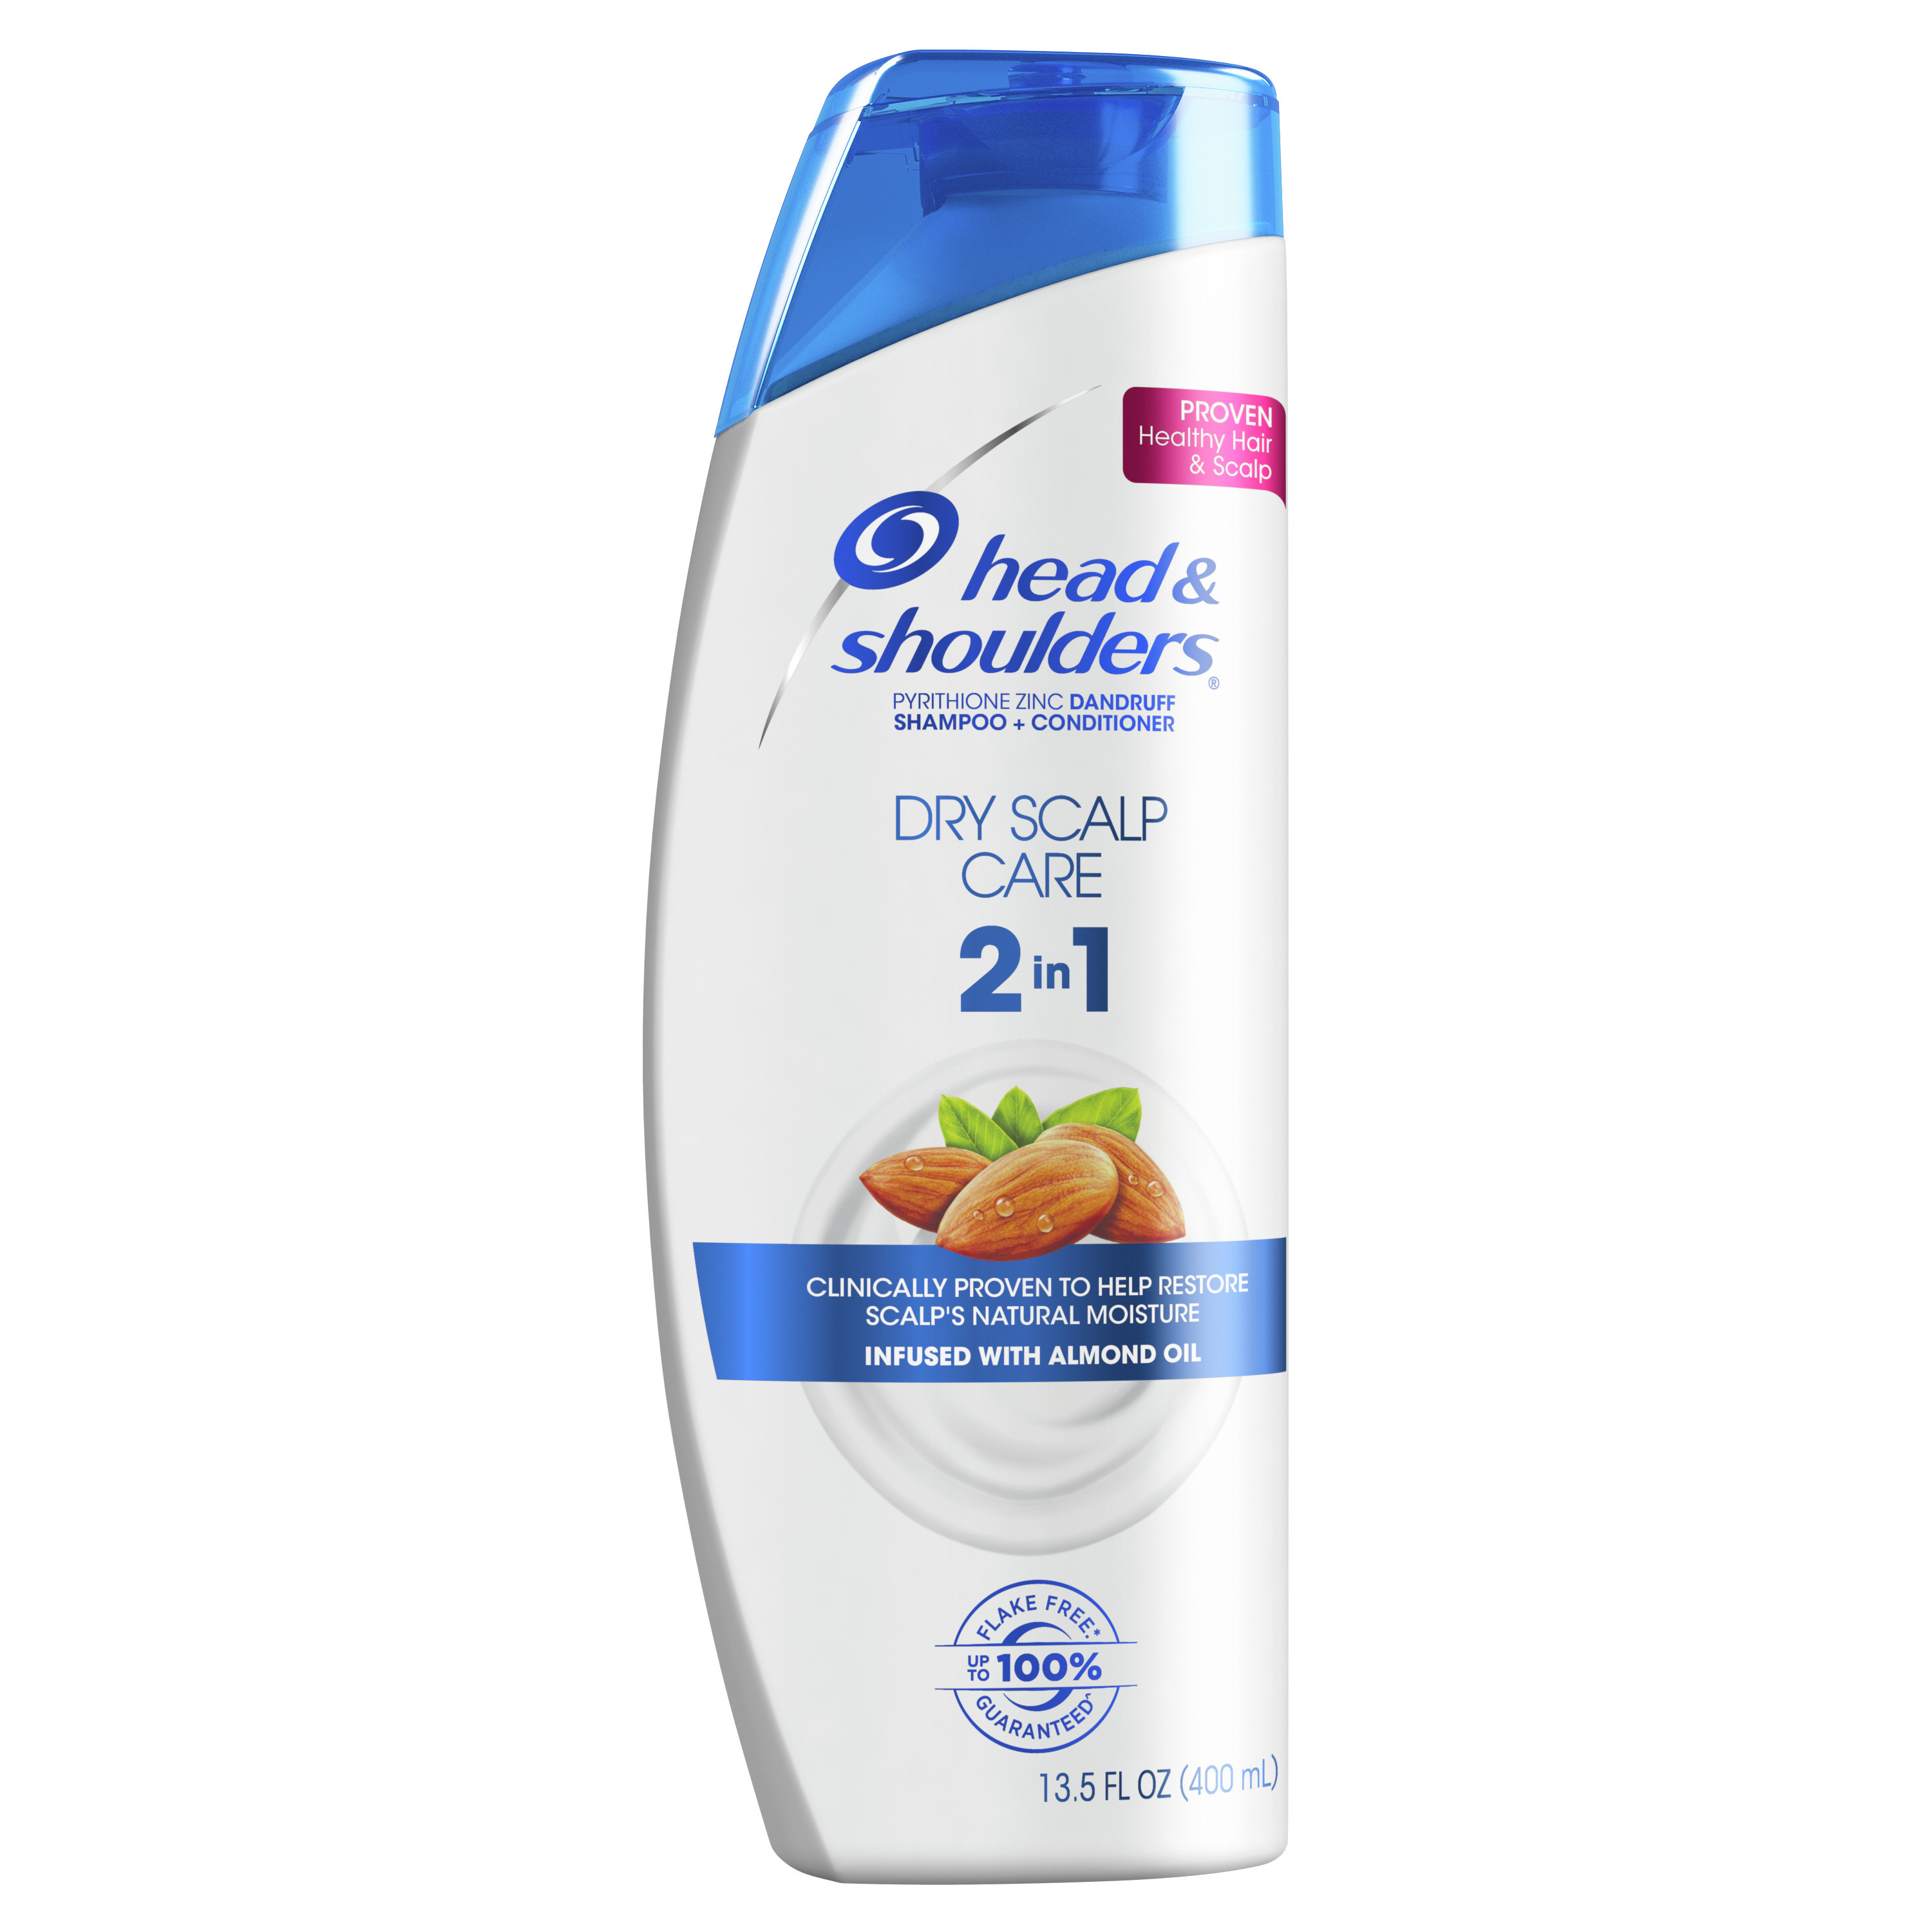 Head & Shoulders Dry Scalp Care Anti-Dandruff 2-in-1 Shampoo + Conditioner, 13.5oz - image 1 of 10